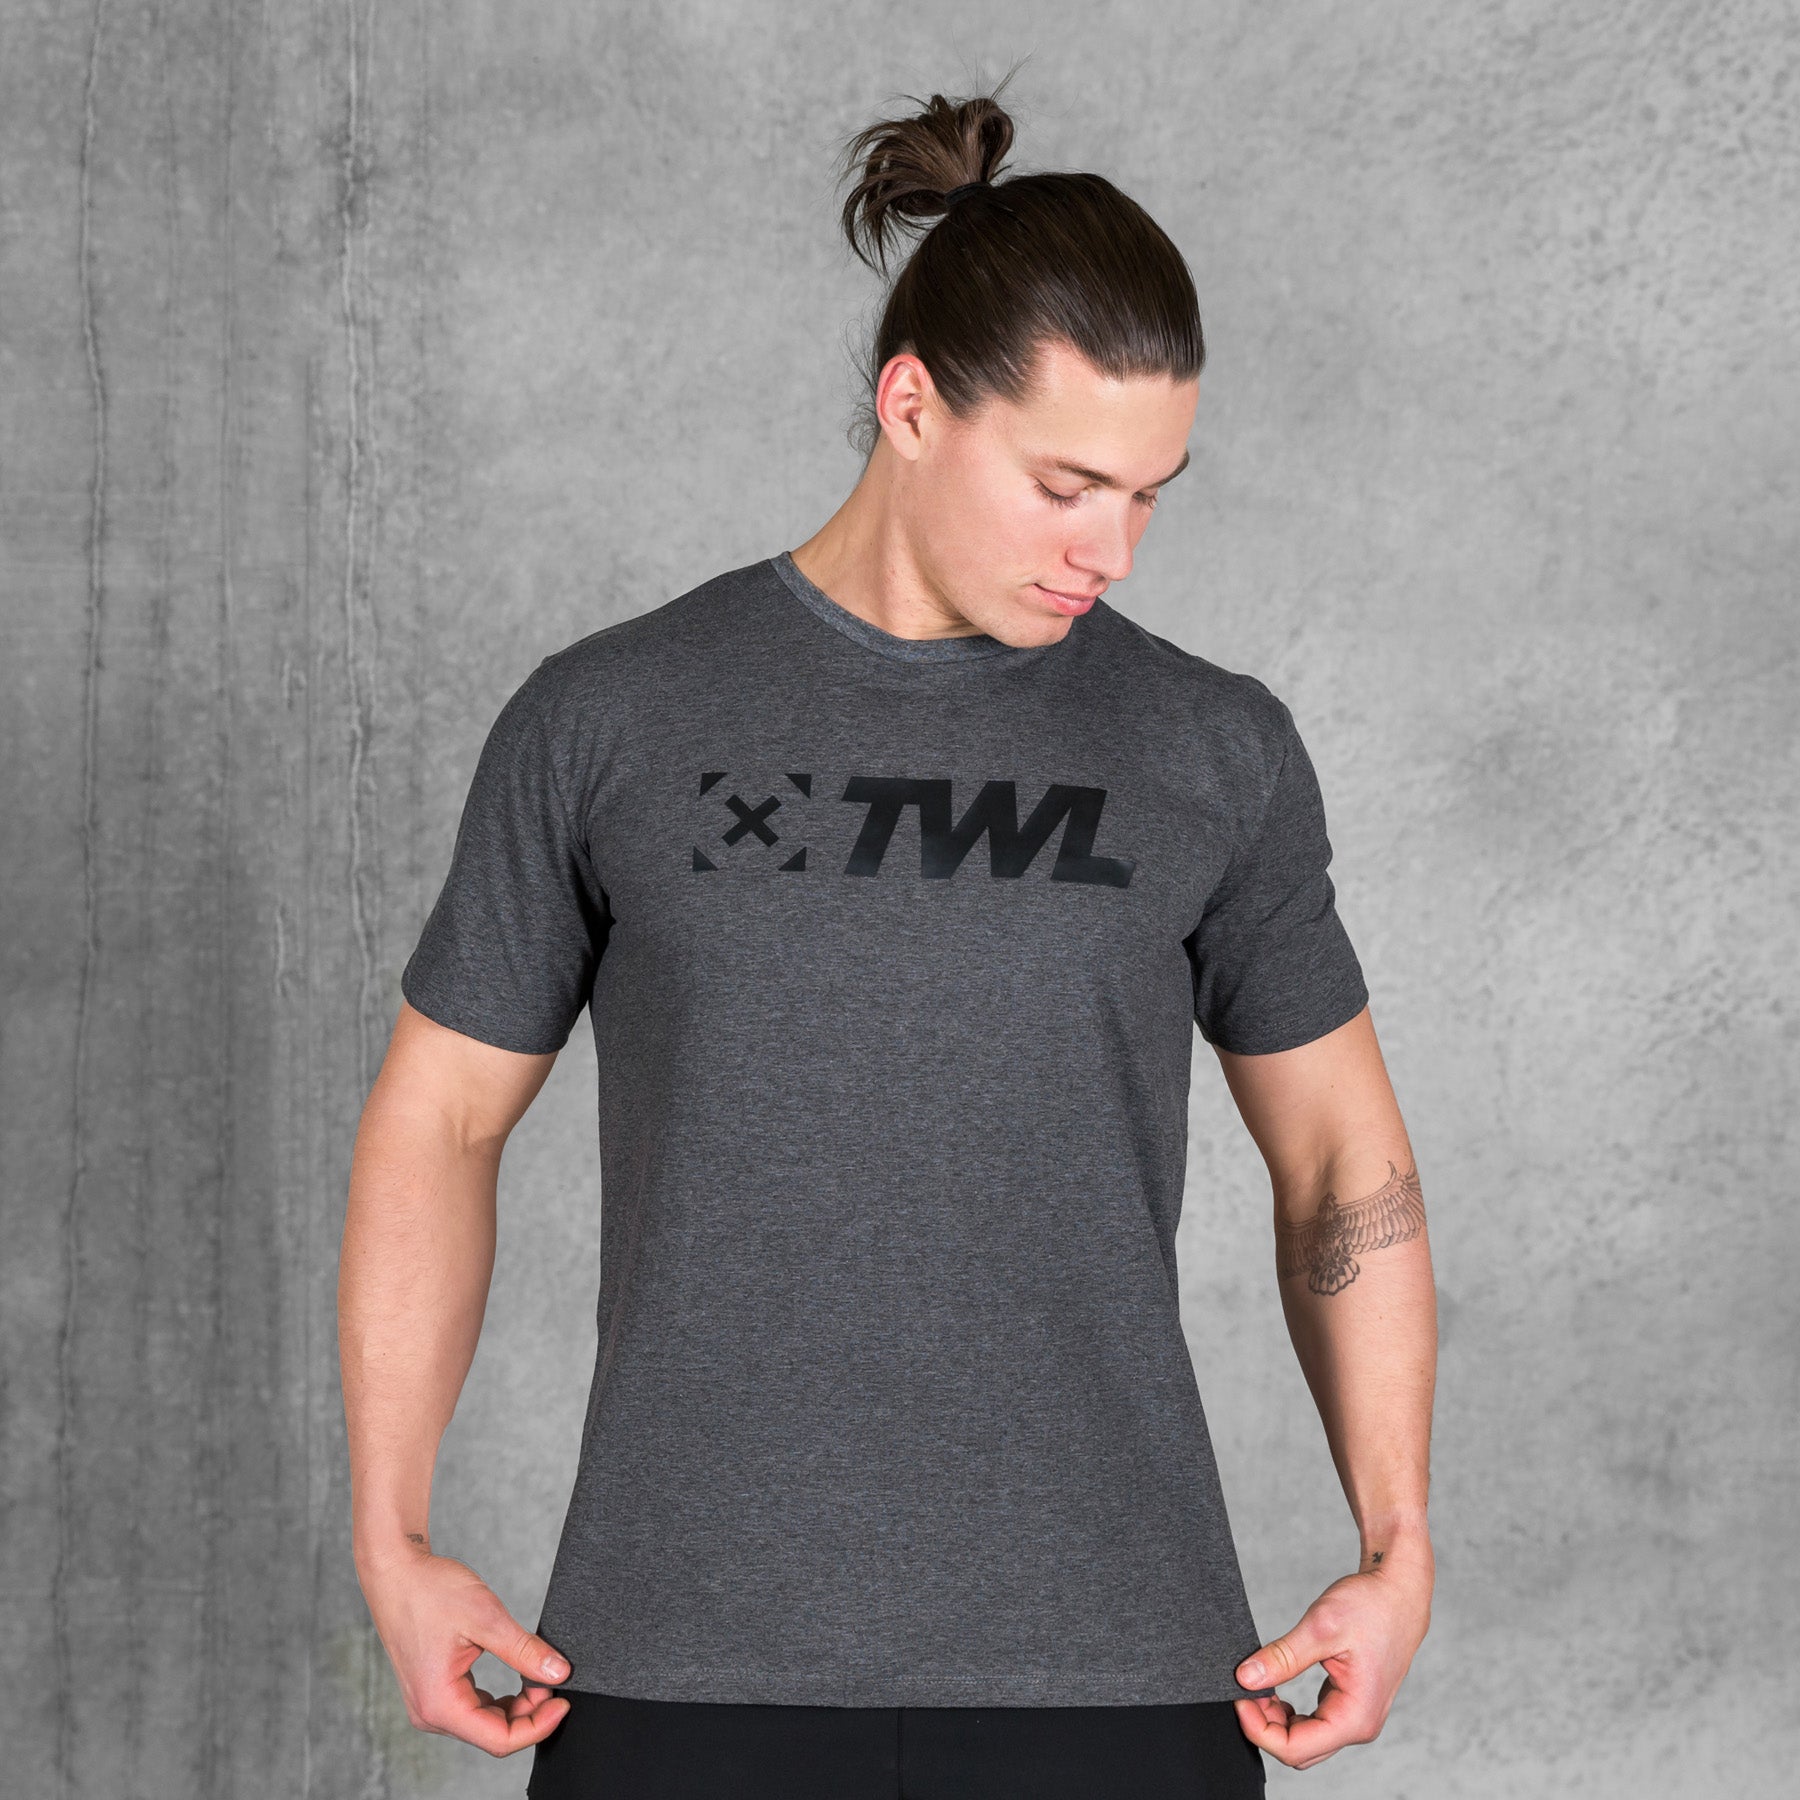 TWL - Men's Everyday T-Shirt 2.0 - CHARCOAL MARL/BLACK